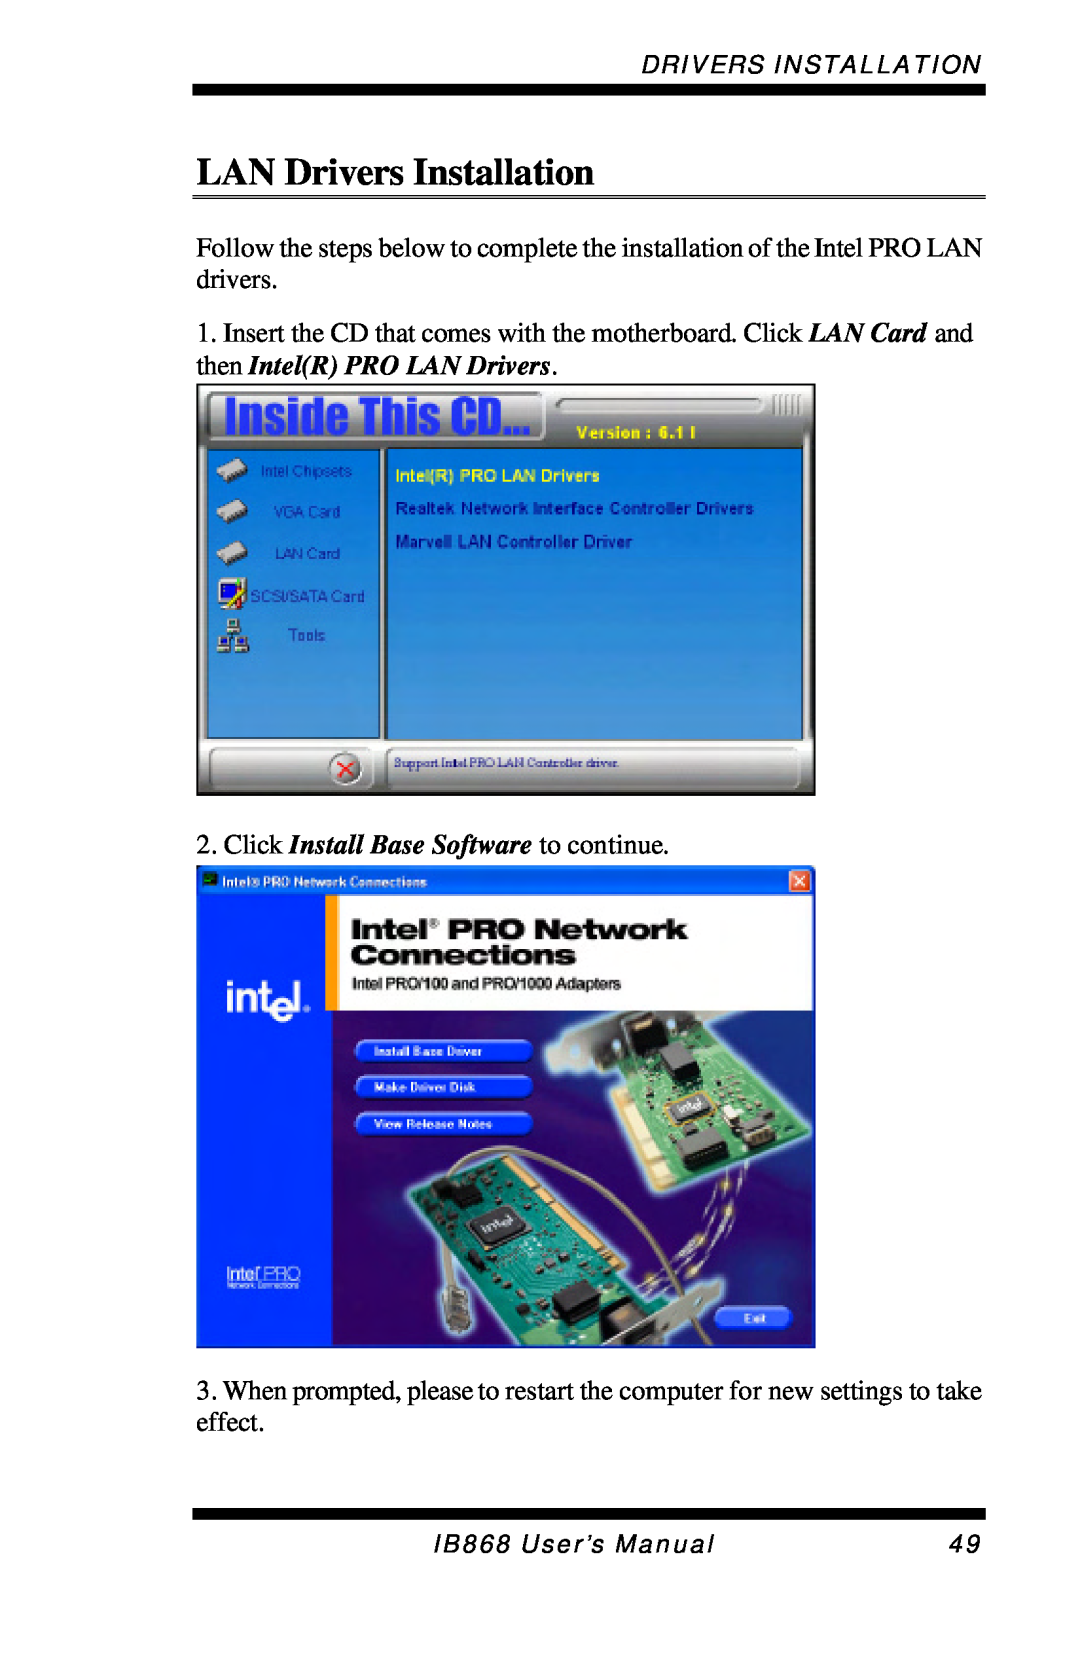 Intel IB868 user manual LAN Drivers Installation, Click Install Base Software to continue 